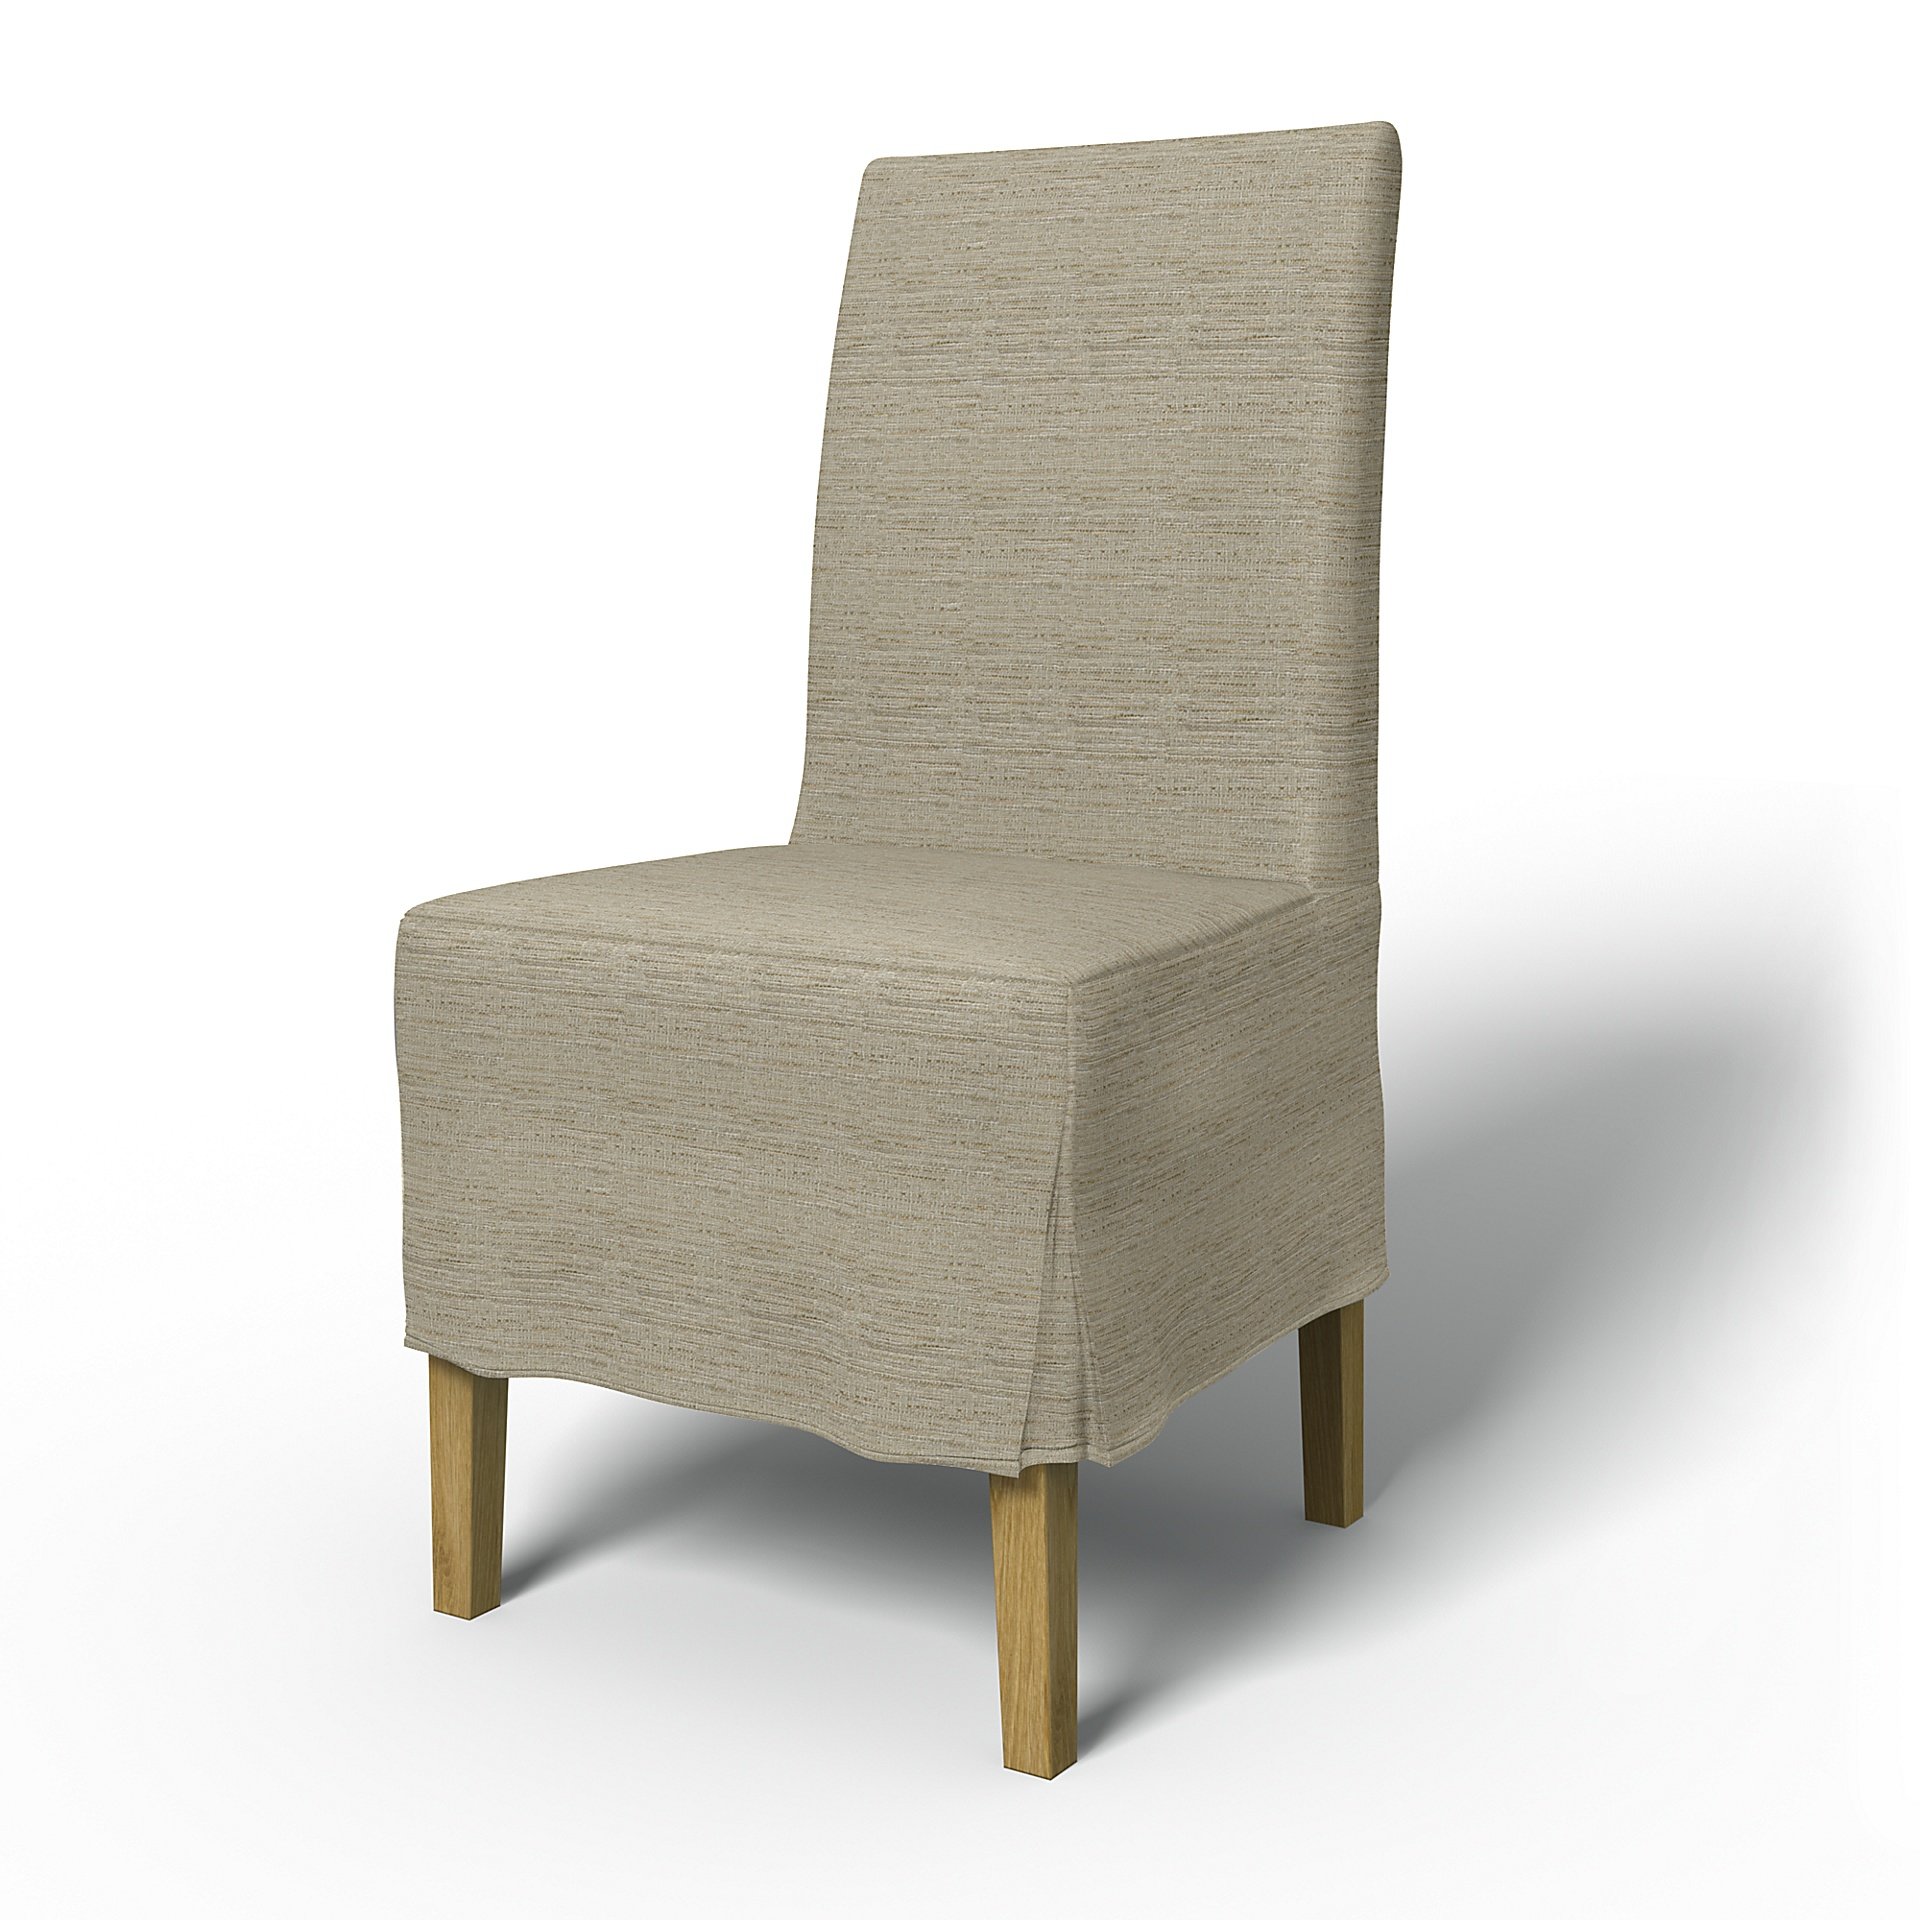 IKEA - Henriksdal Dining Chair Cover Medium skirt with Box Pleat (Standard model), Light Sand, Boucl